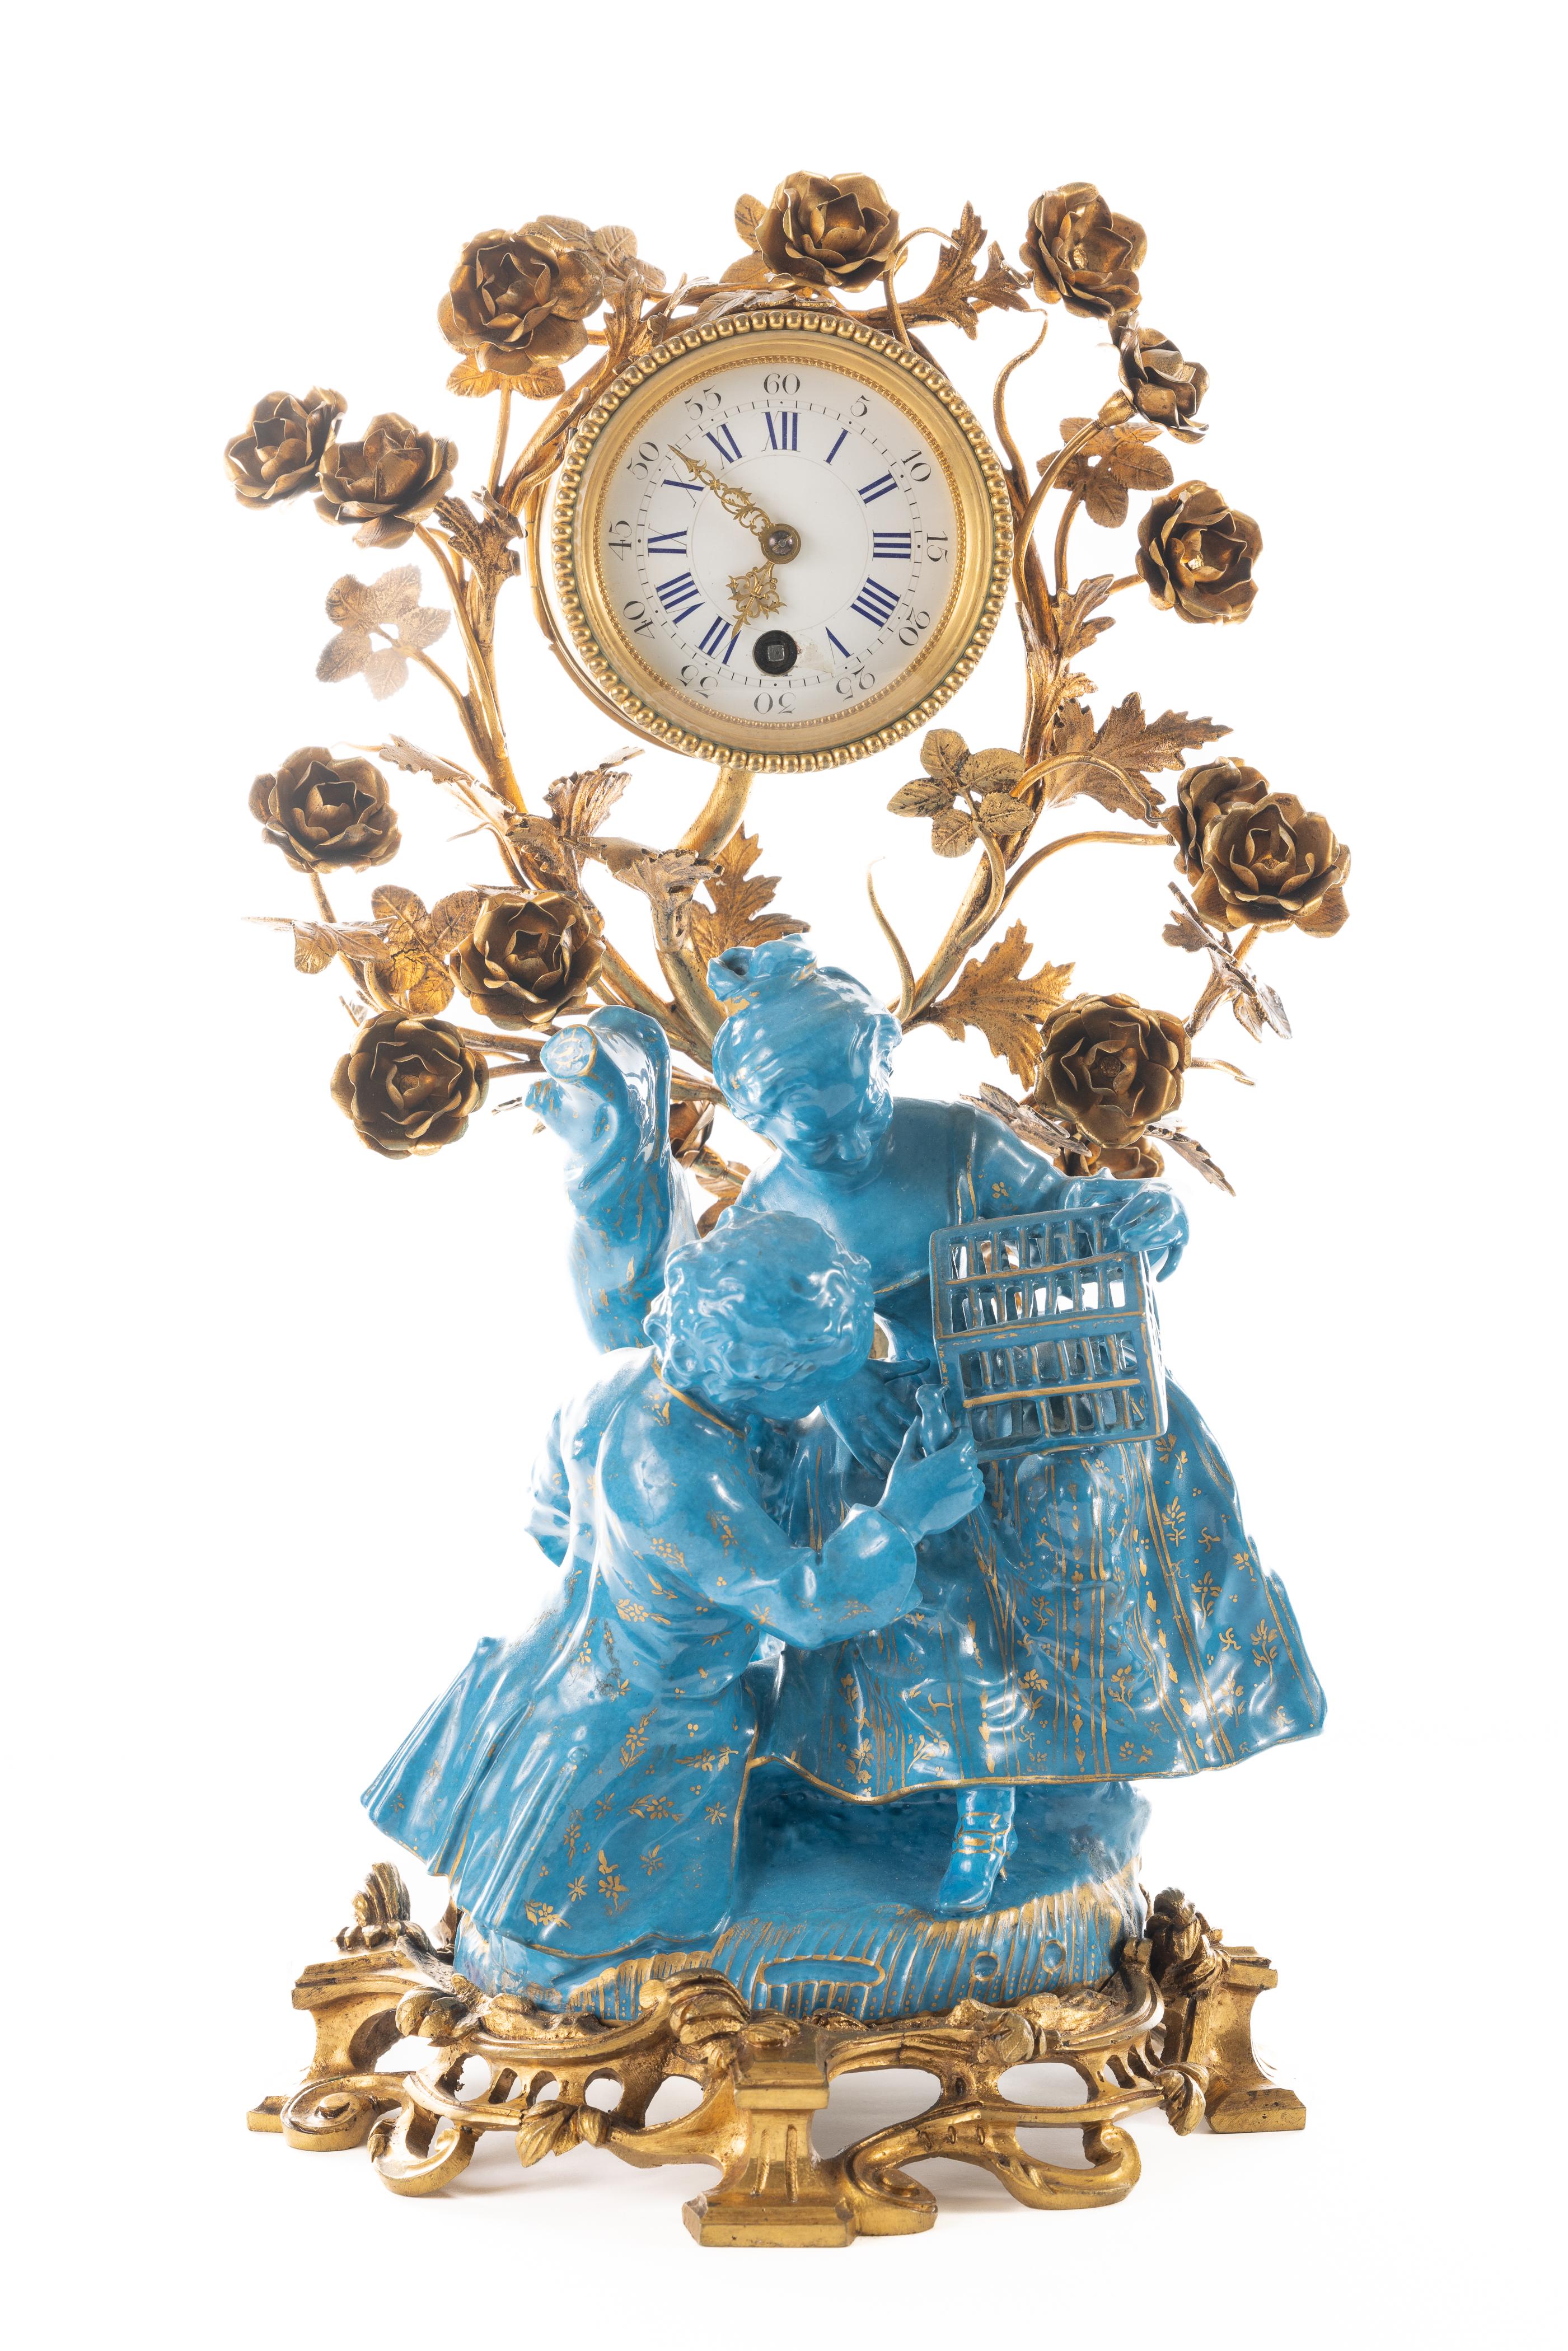 Orologio rococò Luigi XV del XIX secolo in ormolu e porcellana